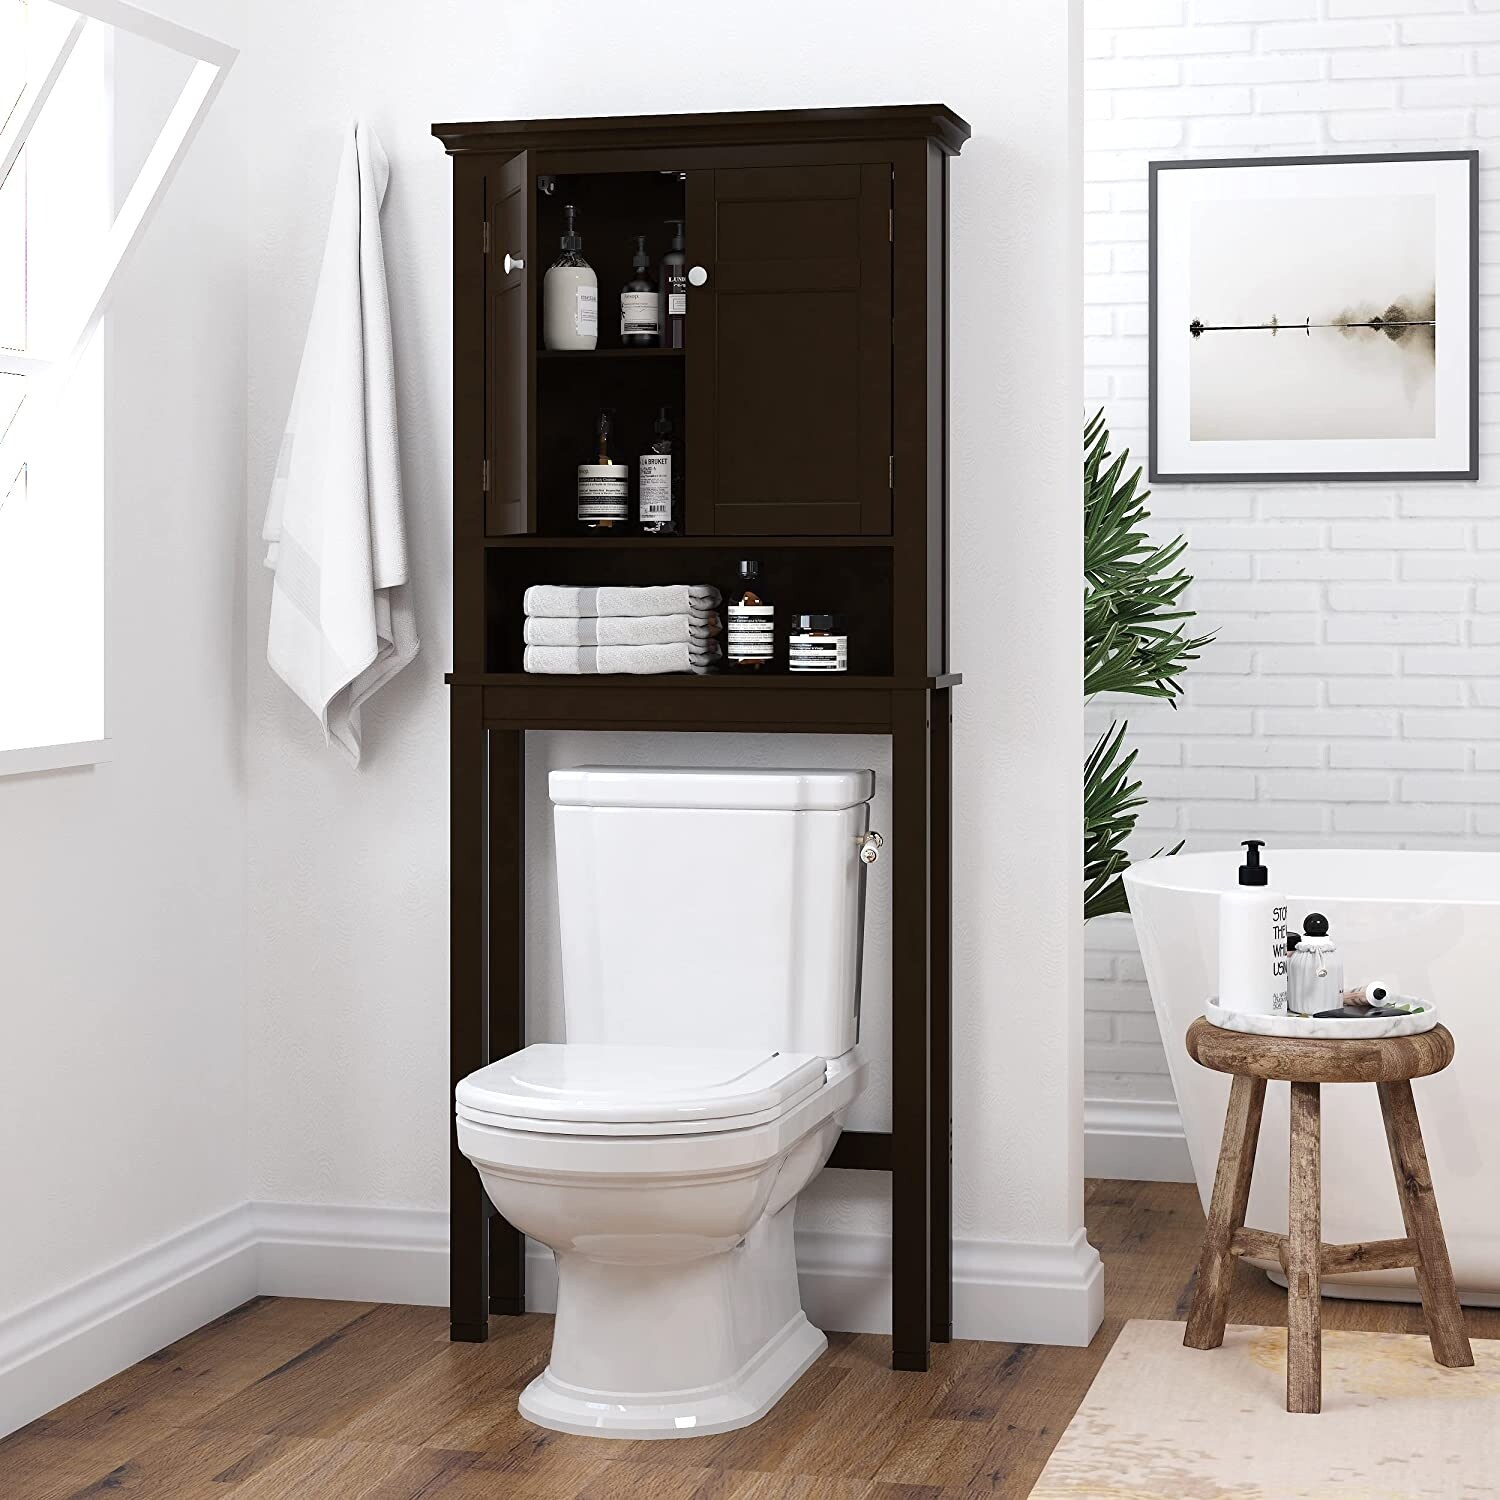 https://ak1.ostkcdn.com/images/products/is/images/direct/045aba03adc051263ef1dbddcf927b4d13566724/Spirich-Home-Bathroom-Shelf-Over-The-Toilet%2C-Bathroom-SpaceSaver%2C-Bathroom-Bathroom-Storage-Cabinet-Organizer-with-Drawer.jpg